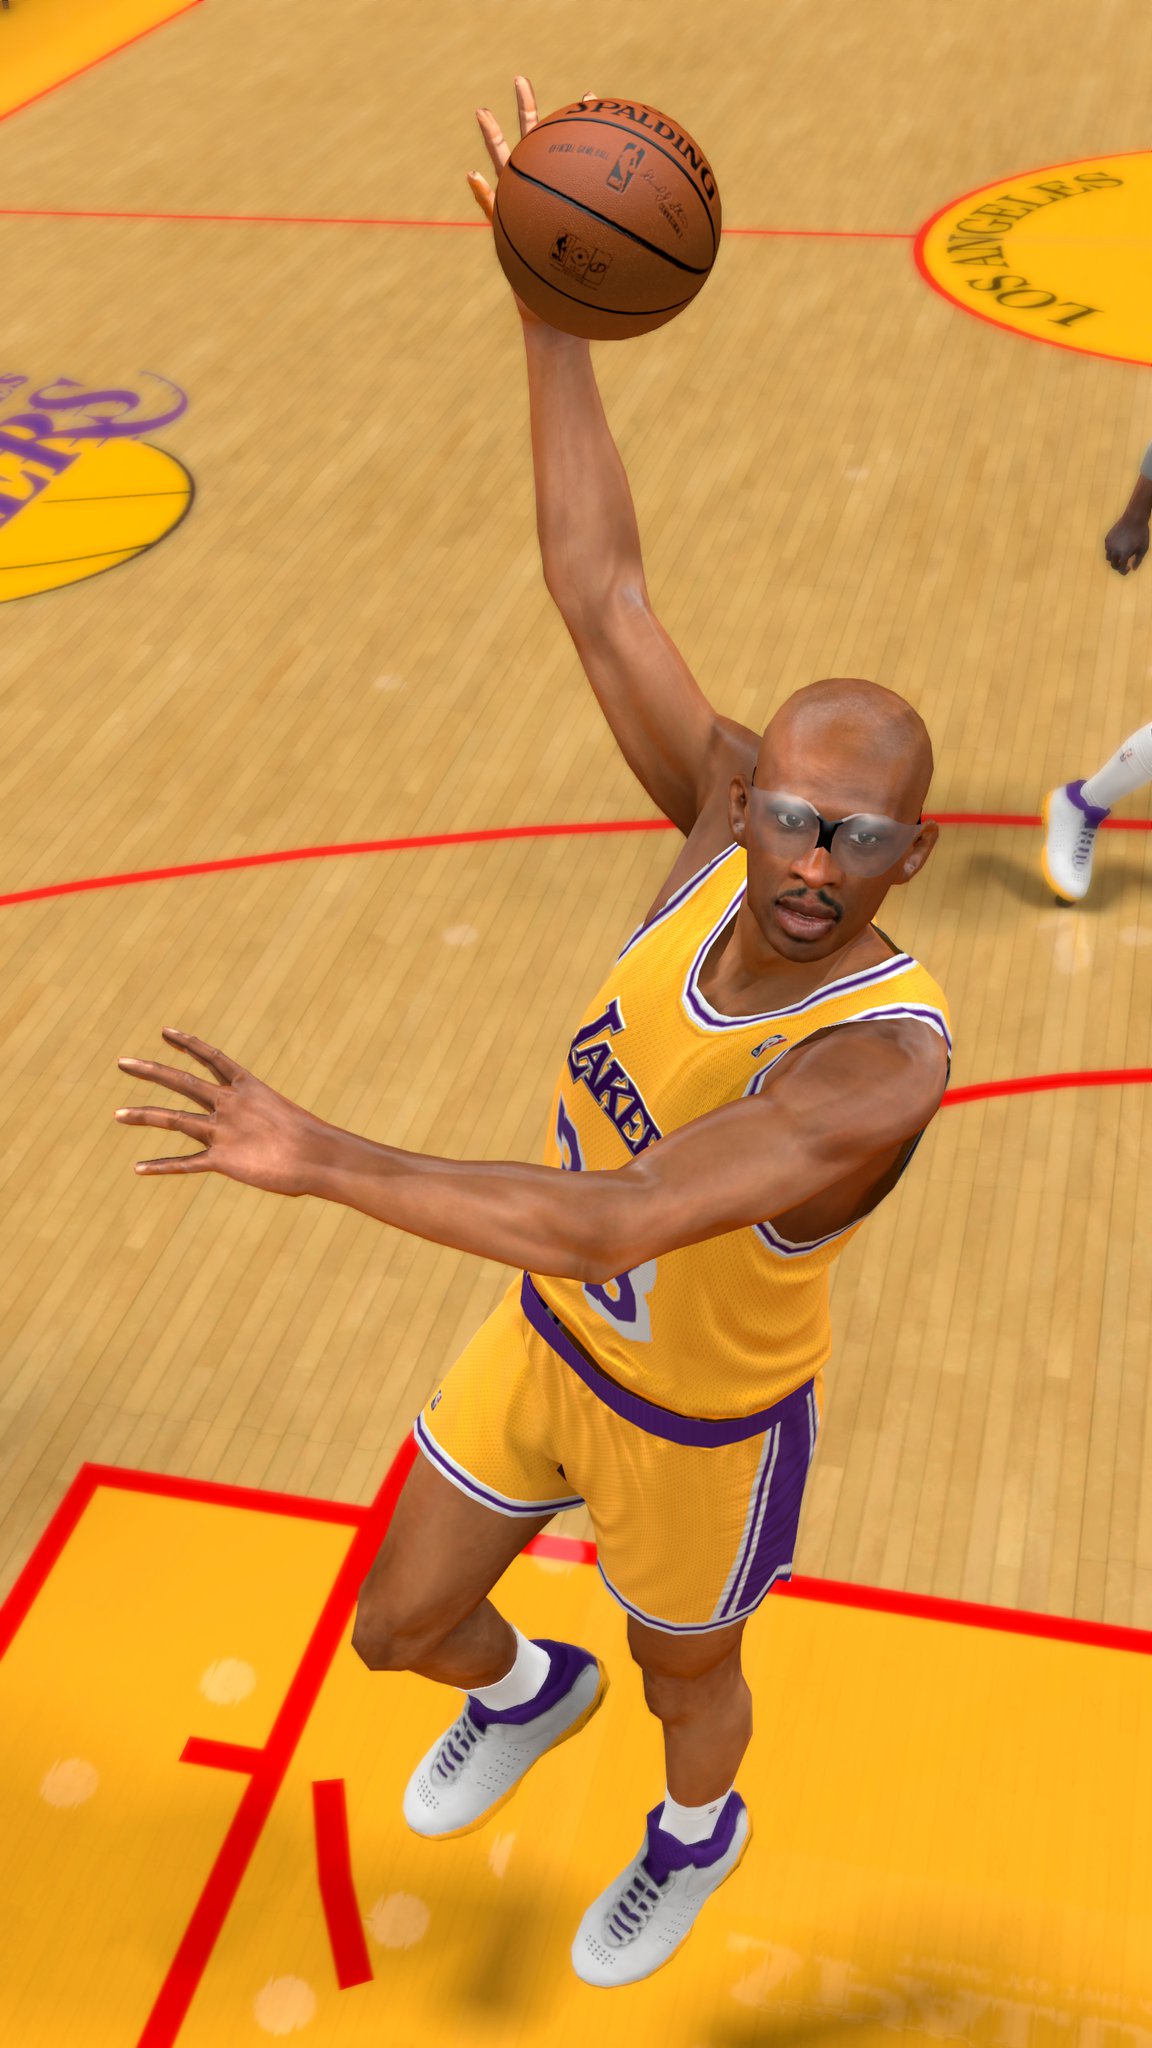 Slam Dunking New NBA 2K12 Screenshots Released - Just Push Start